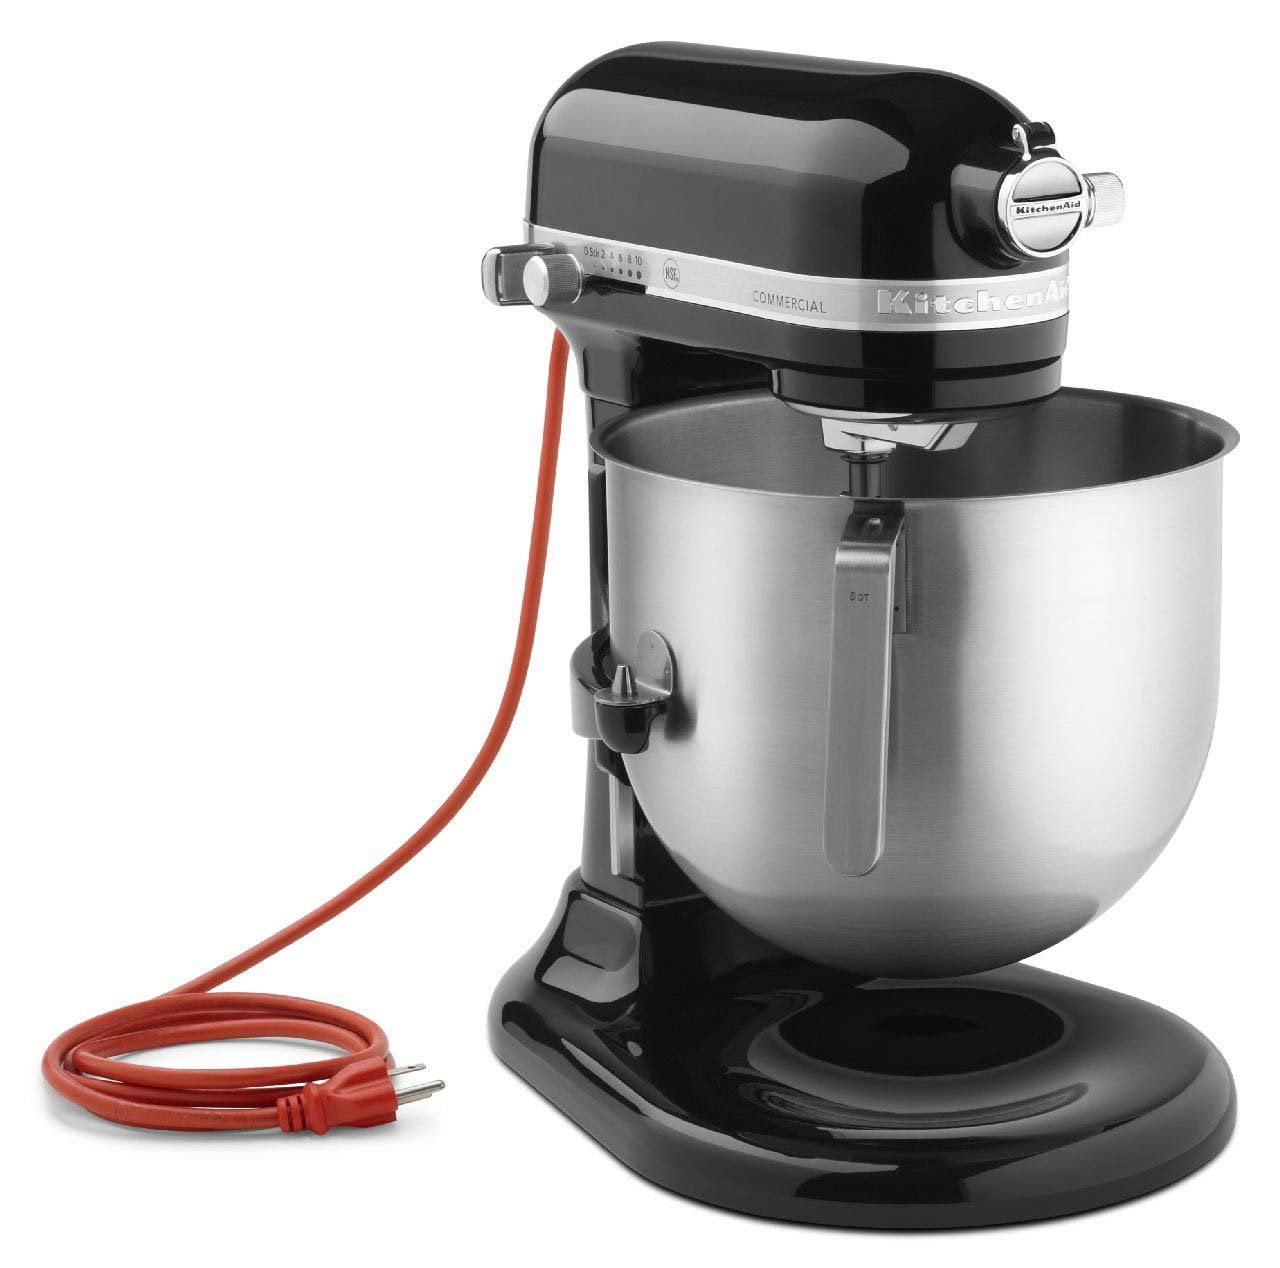 Kitchenaid Heavy Duty Lift Stand mixer - appliances - by owner - sale -  craigslist